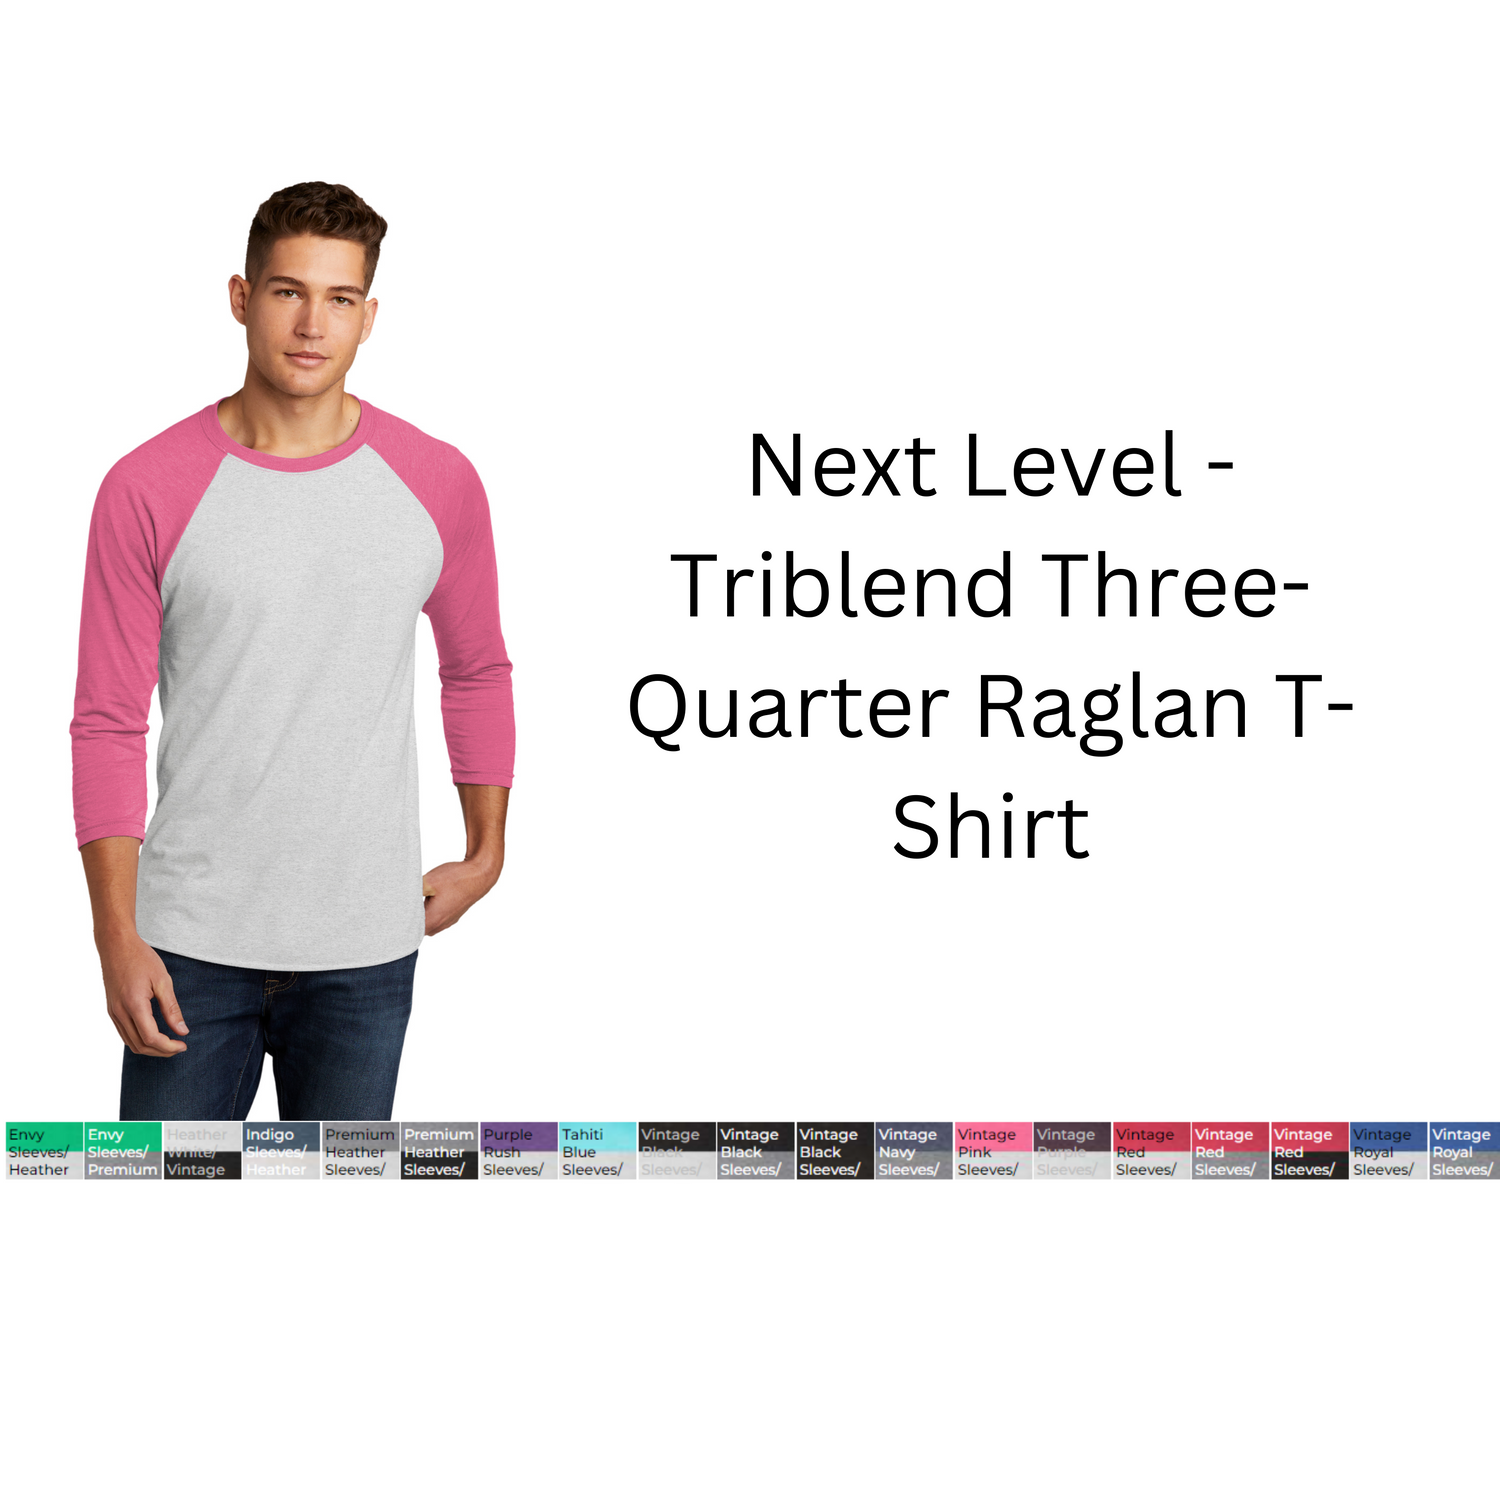 Triblend Three-Quarter Raglan T-Shirt